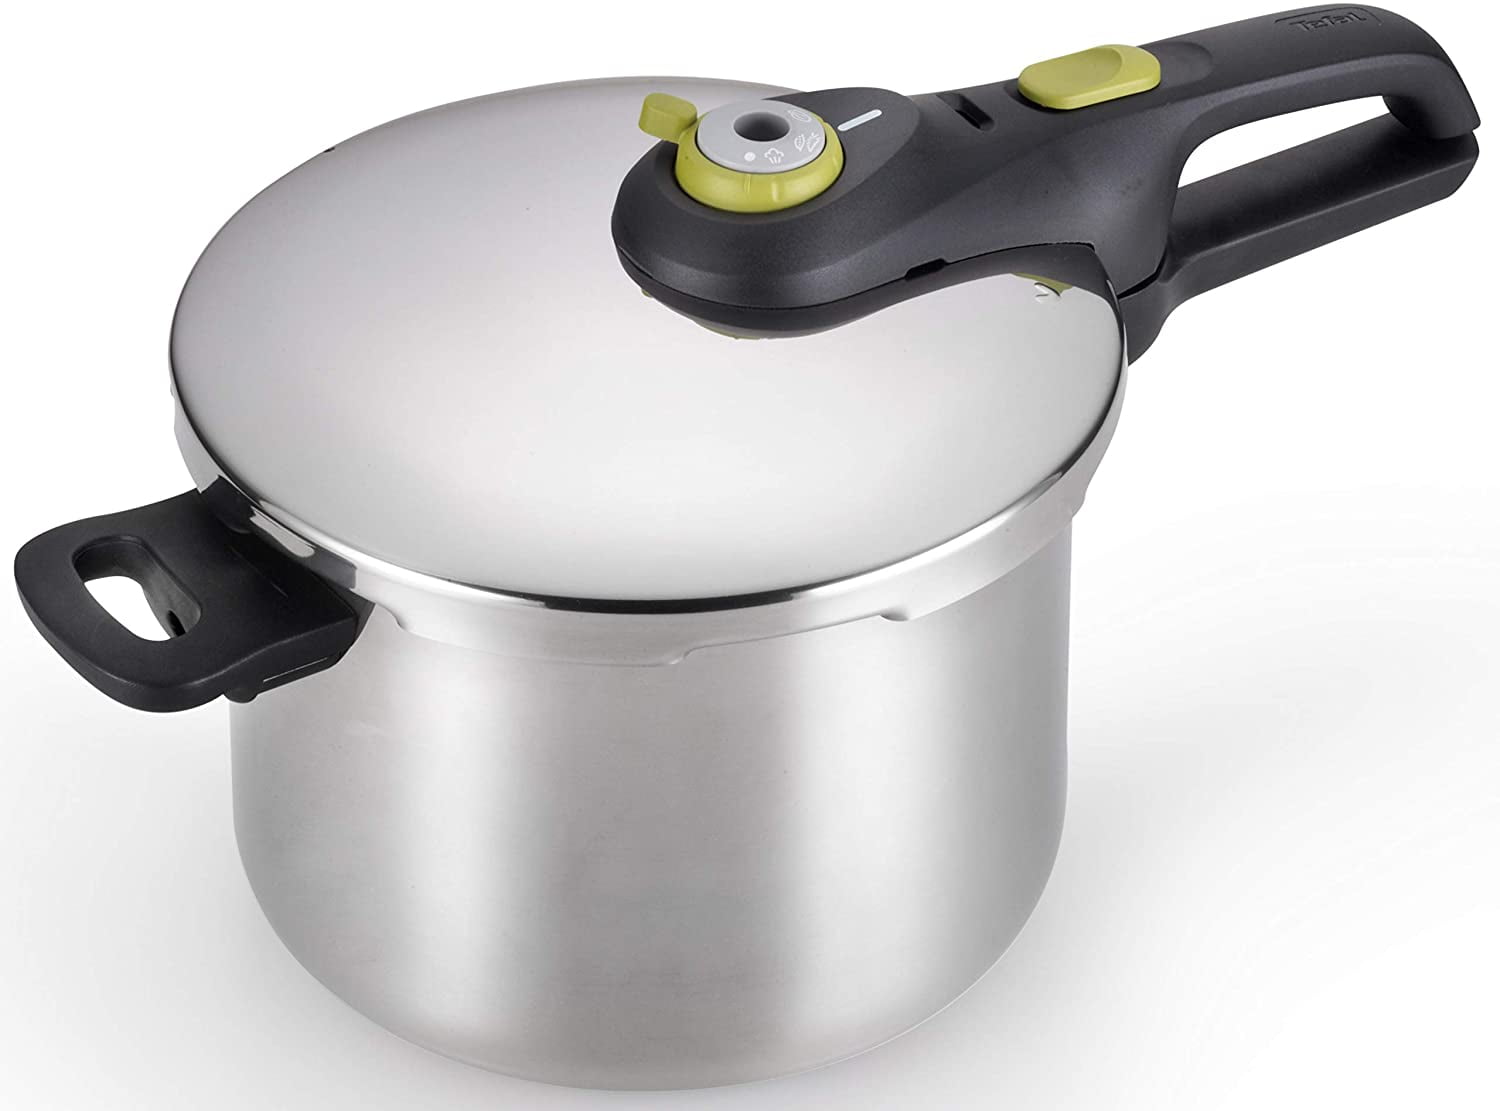 T-fal Initiatives Secure Aluminum Cookware, Pressure Cooker, 6